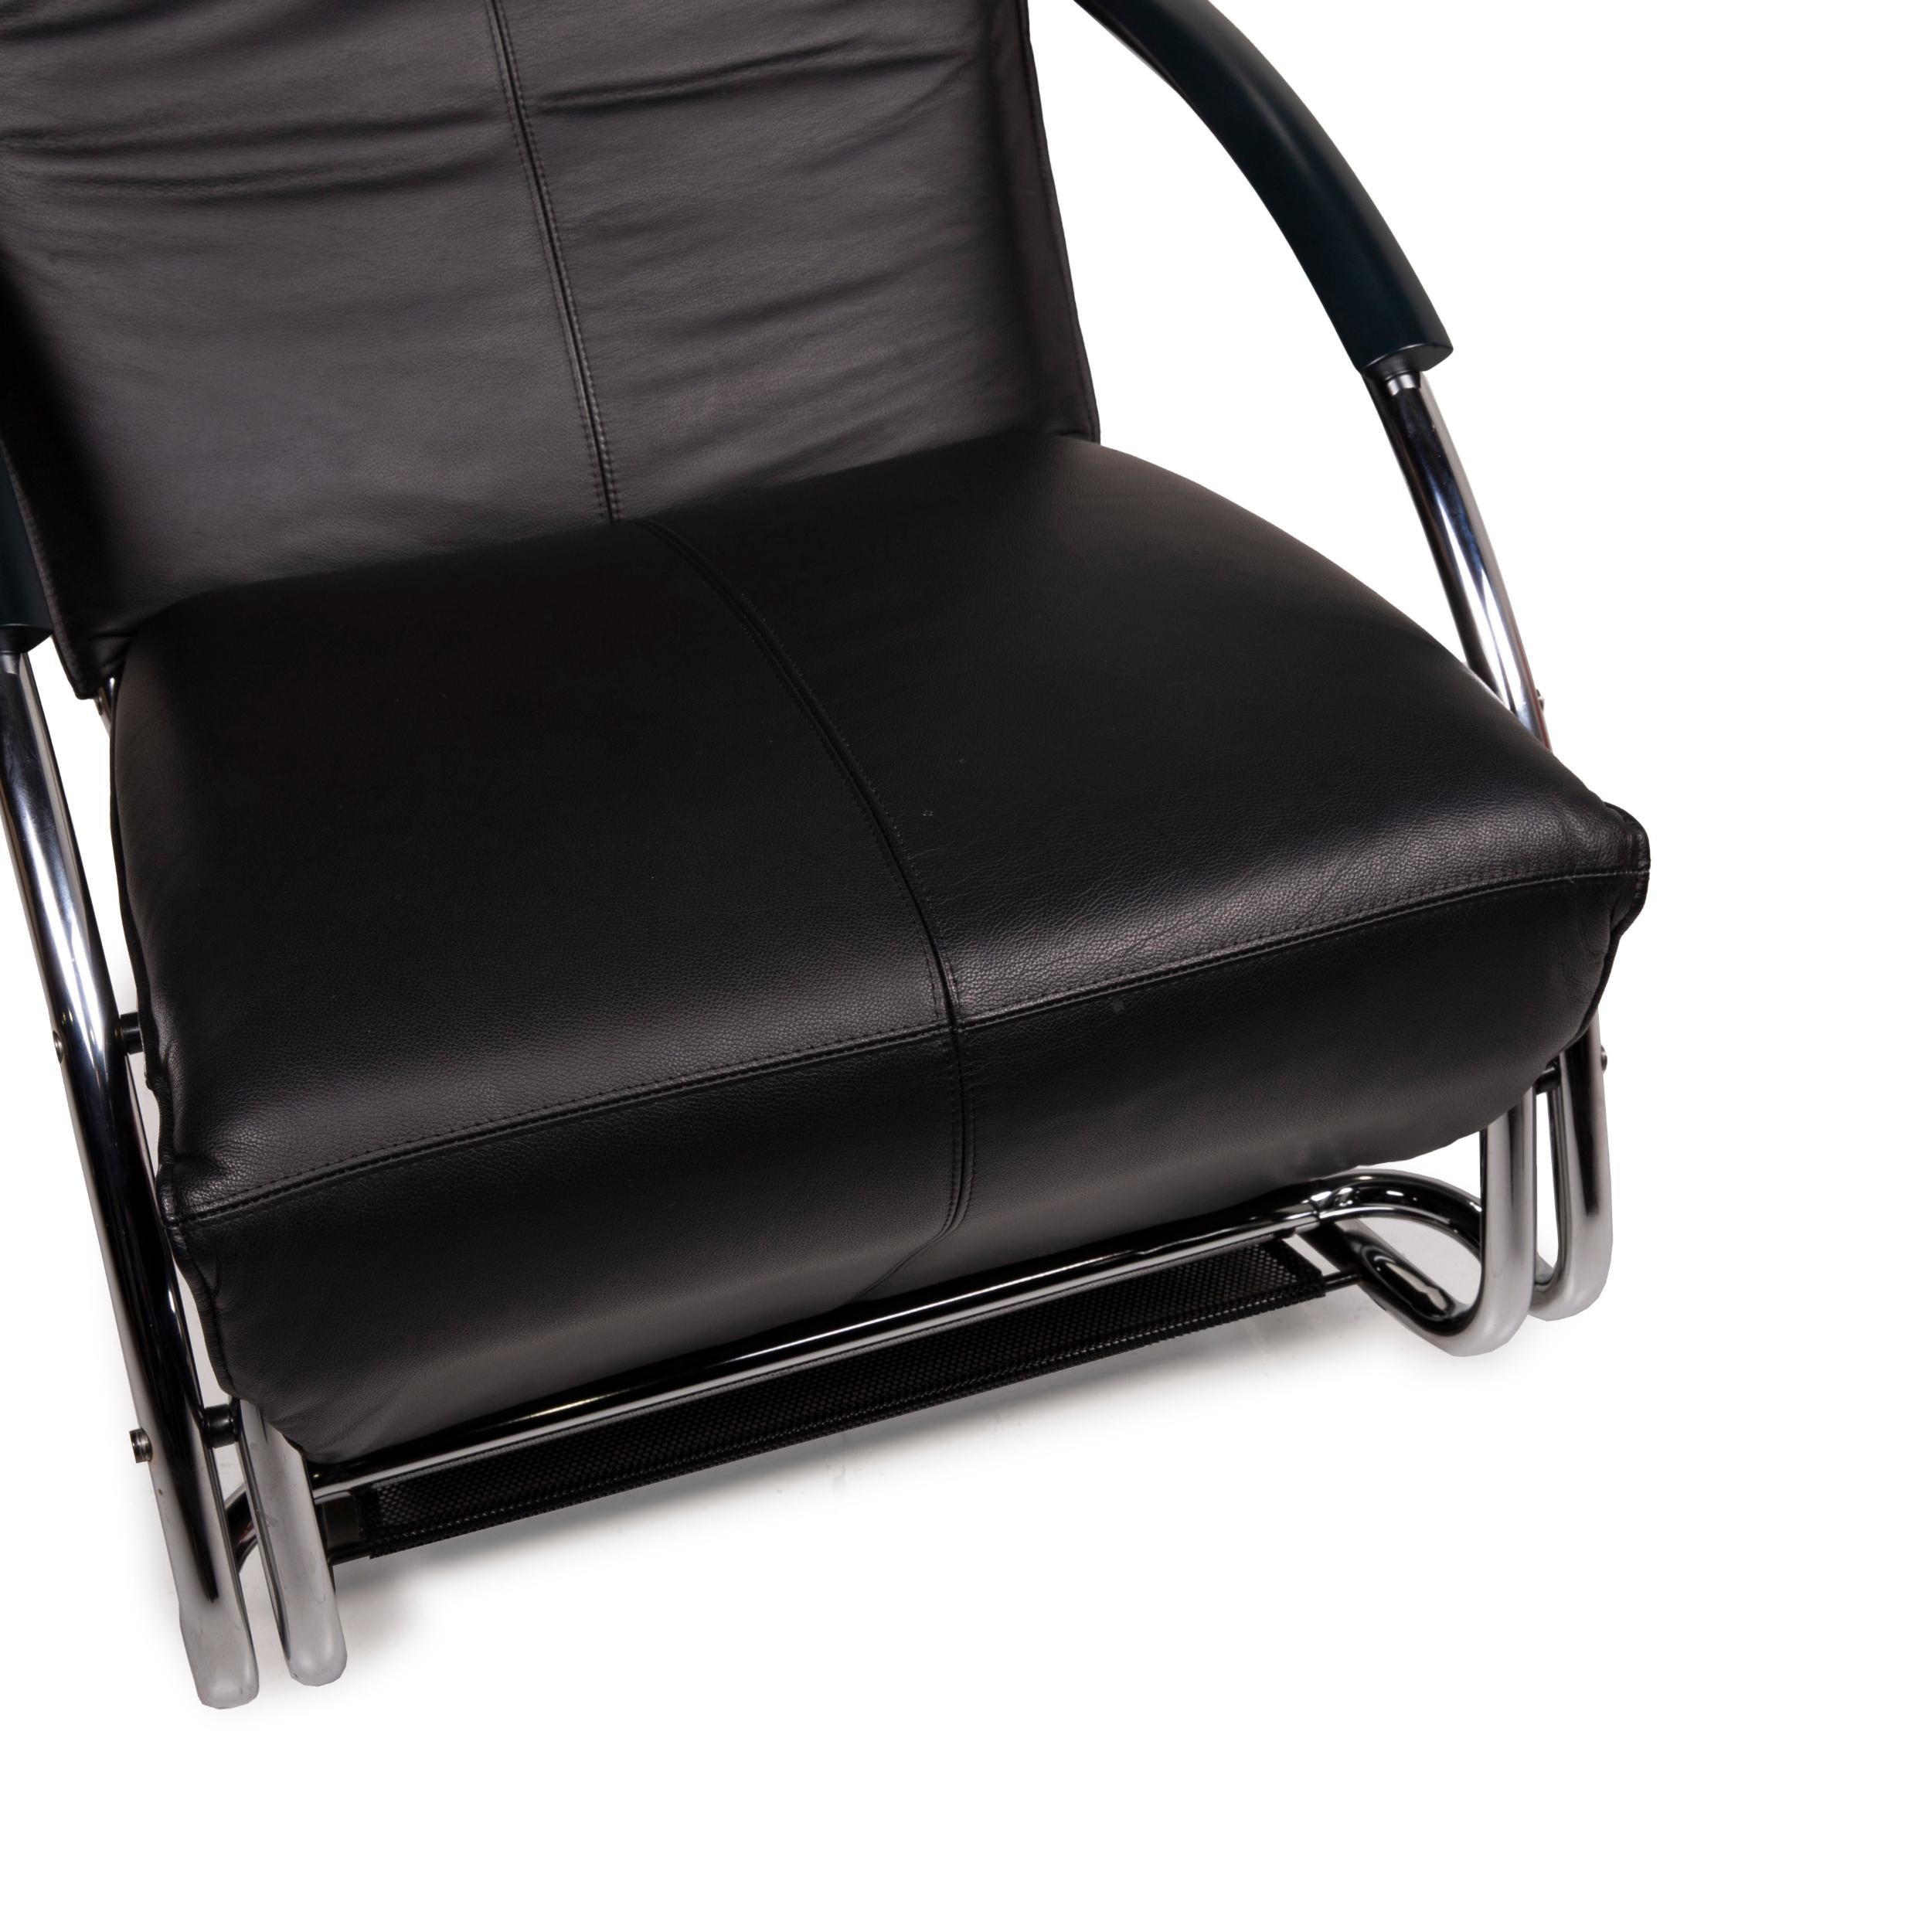 backsaver chair